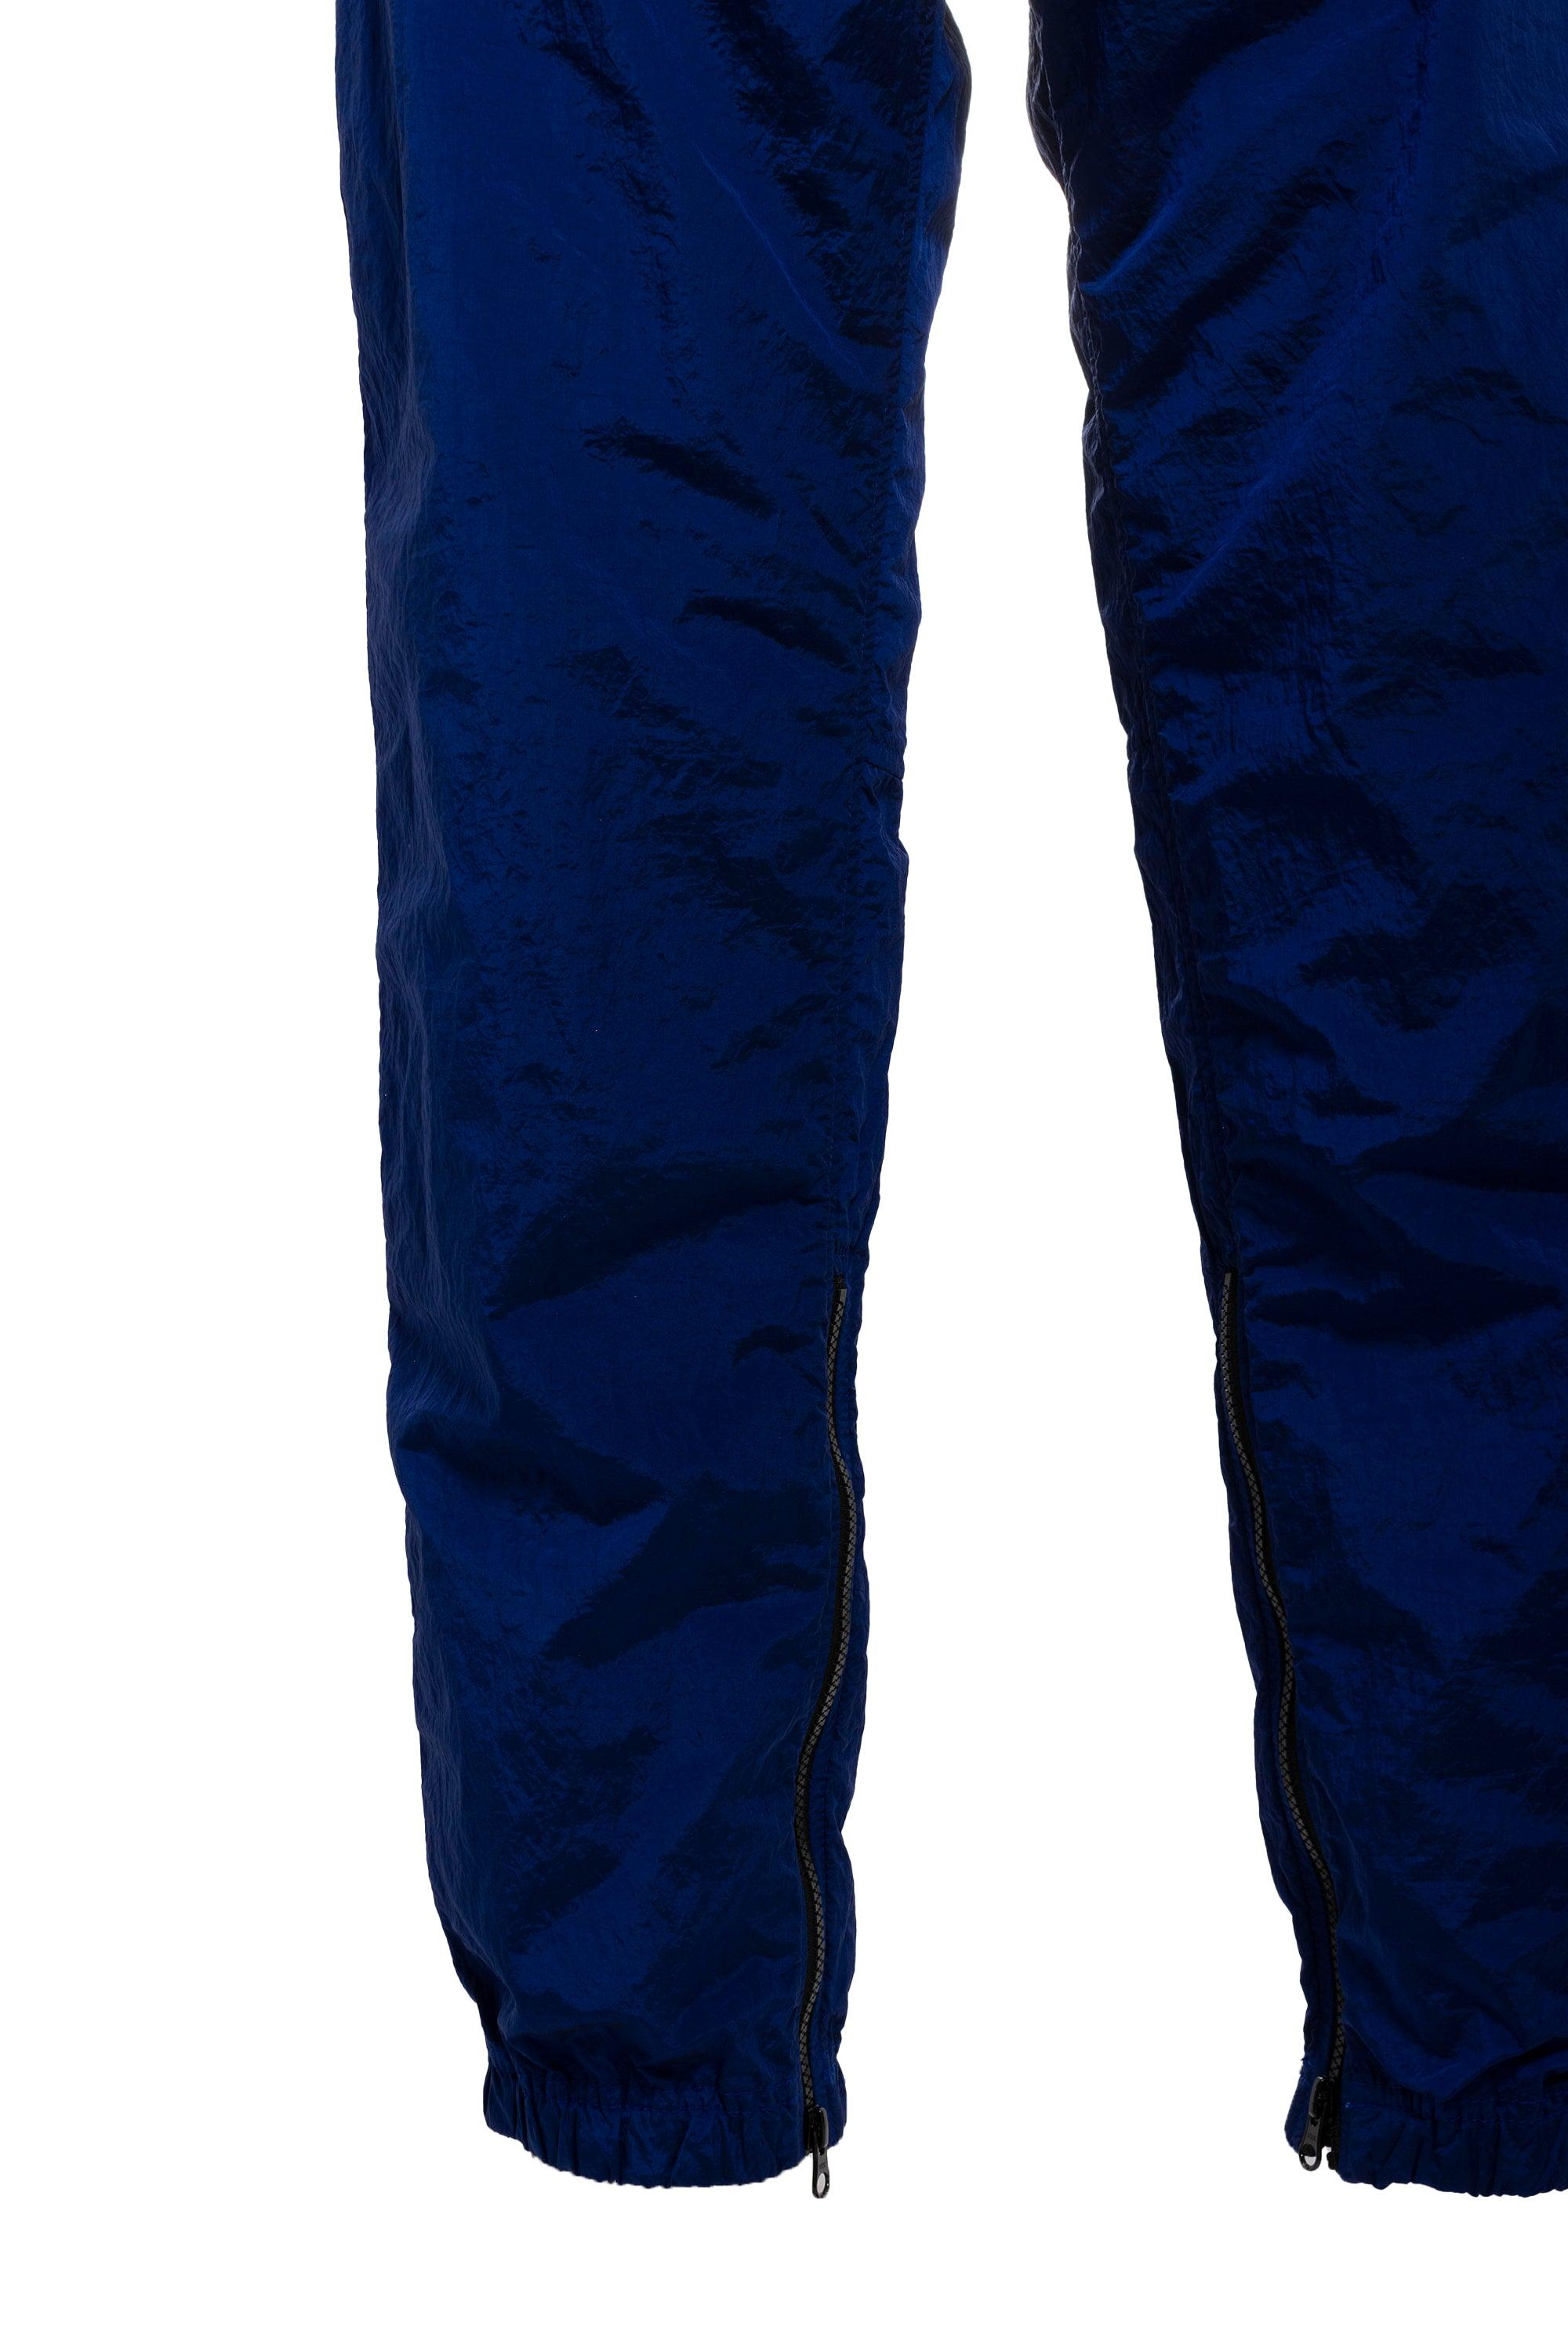 Stone Island Nylon Metal Pants in Blue for Men | Lyst UK